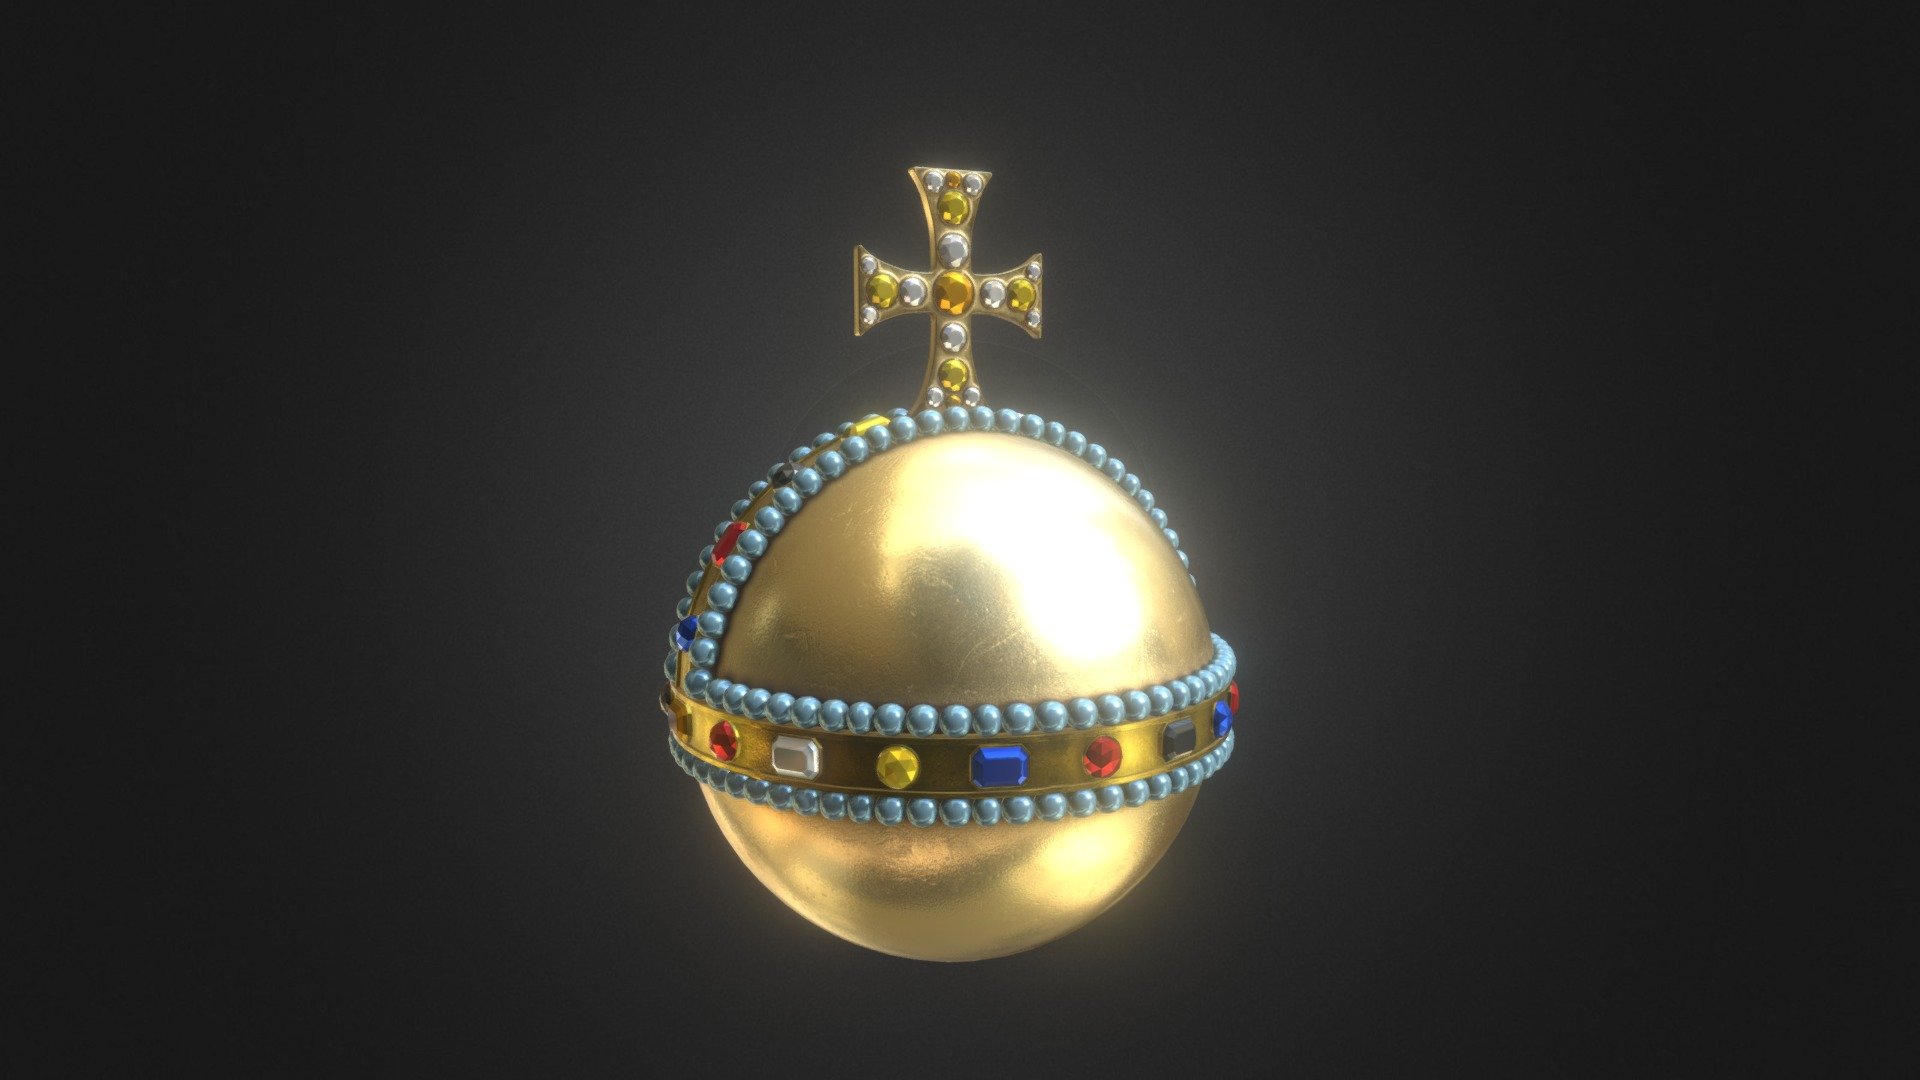 Second symbol of royal power - Globus crusiger - 3D model by Shoshin Mikhail (@AikaFion) 3d model